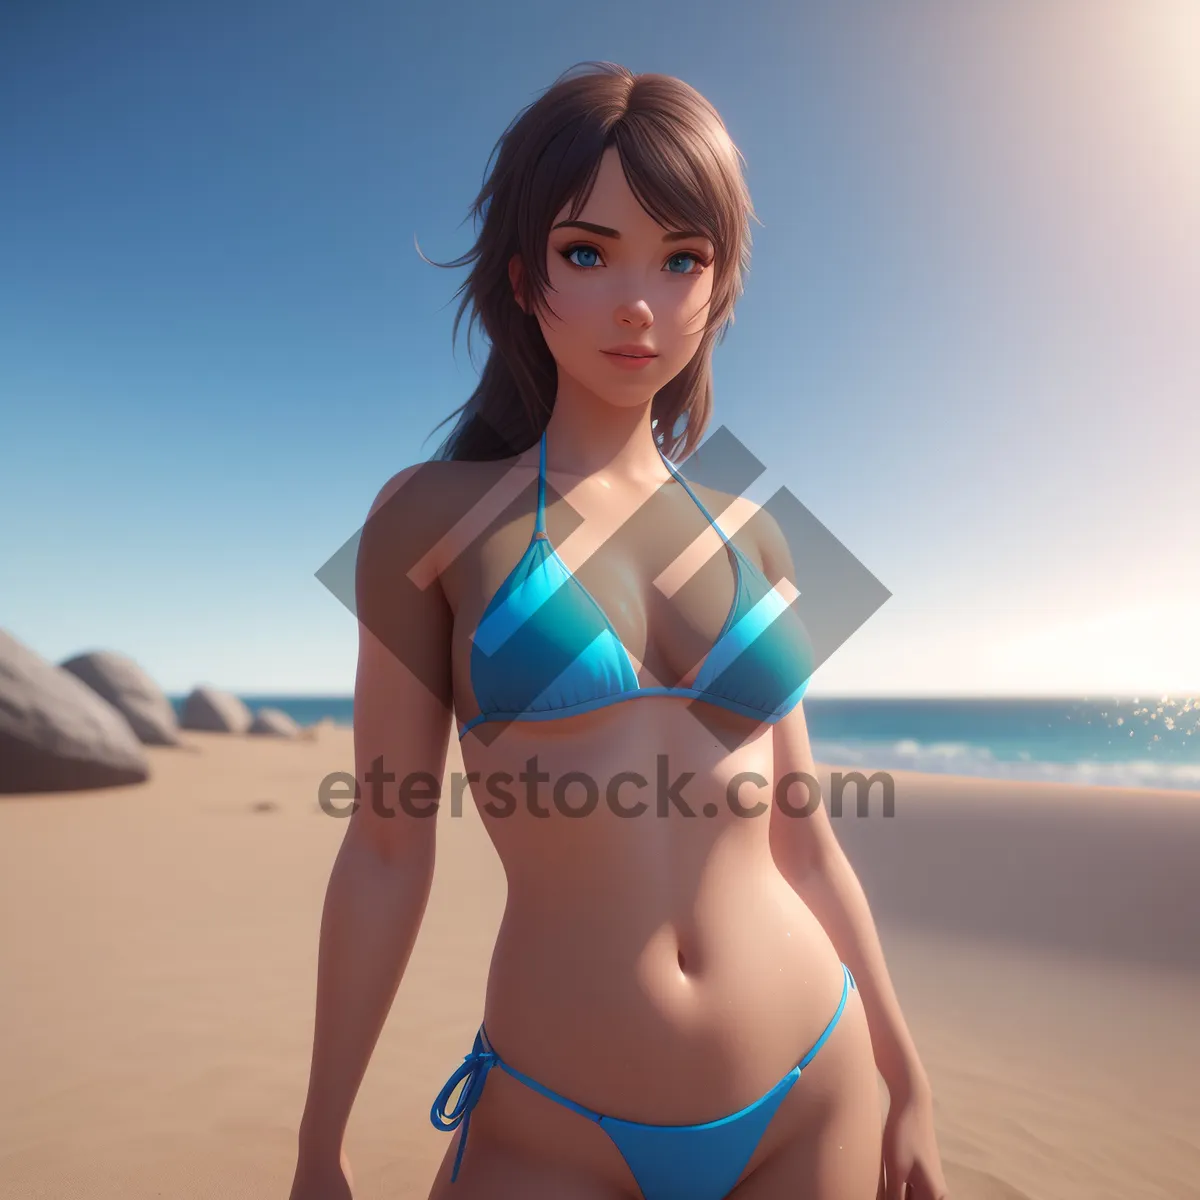 Picture of Beach Babe in Bikini: Stunning Summer Swimsuit Style